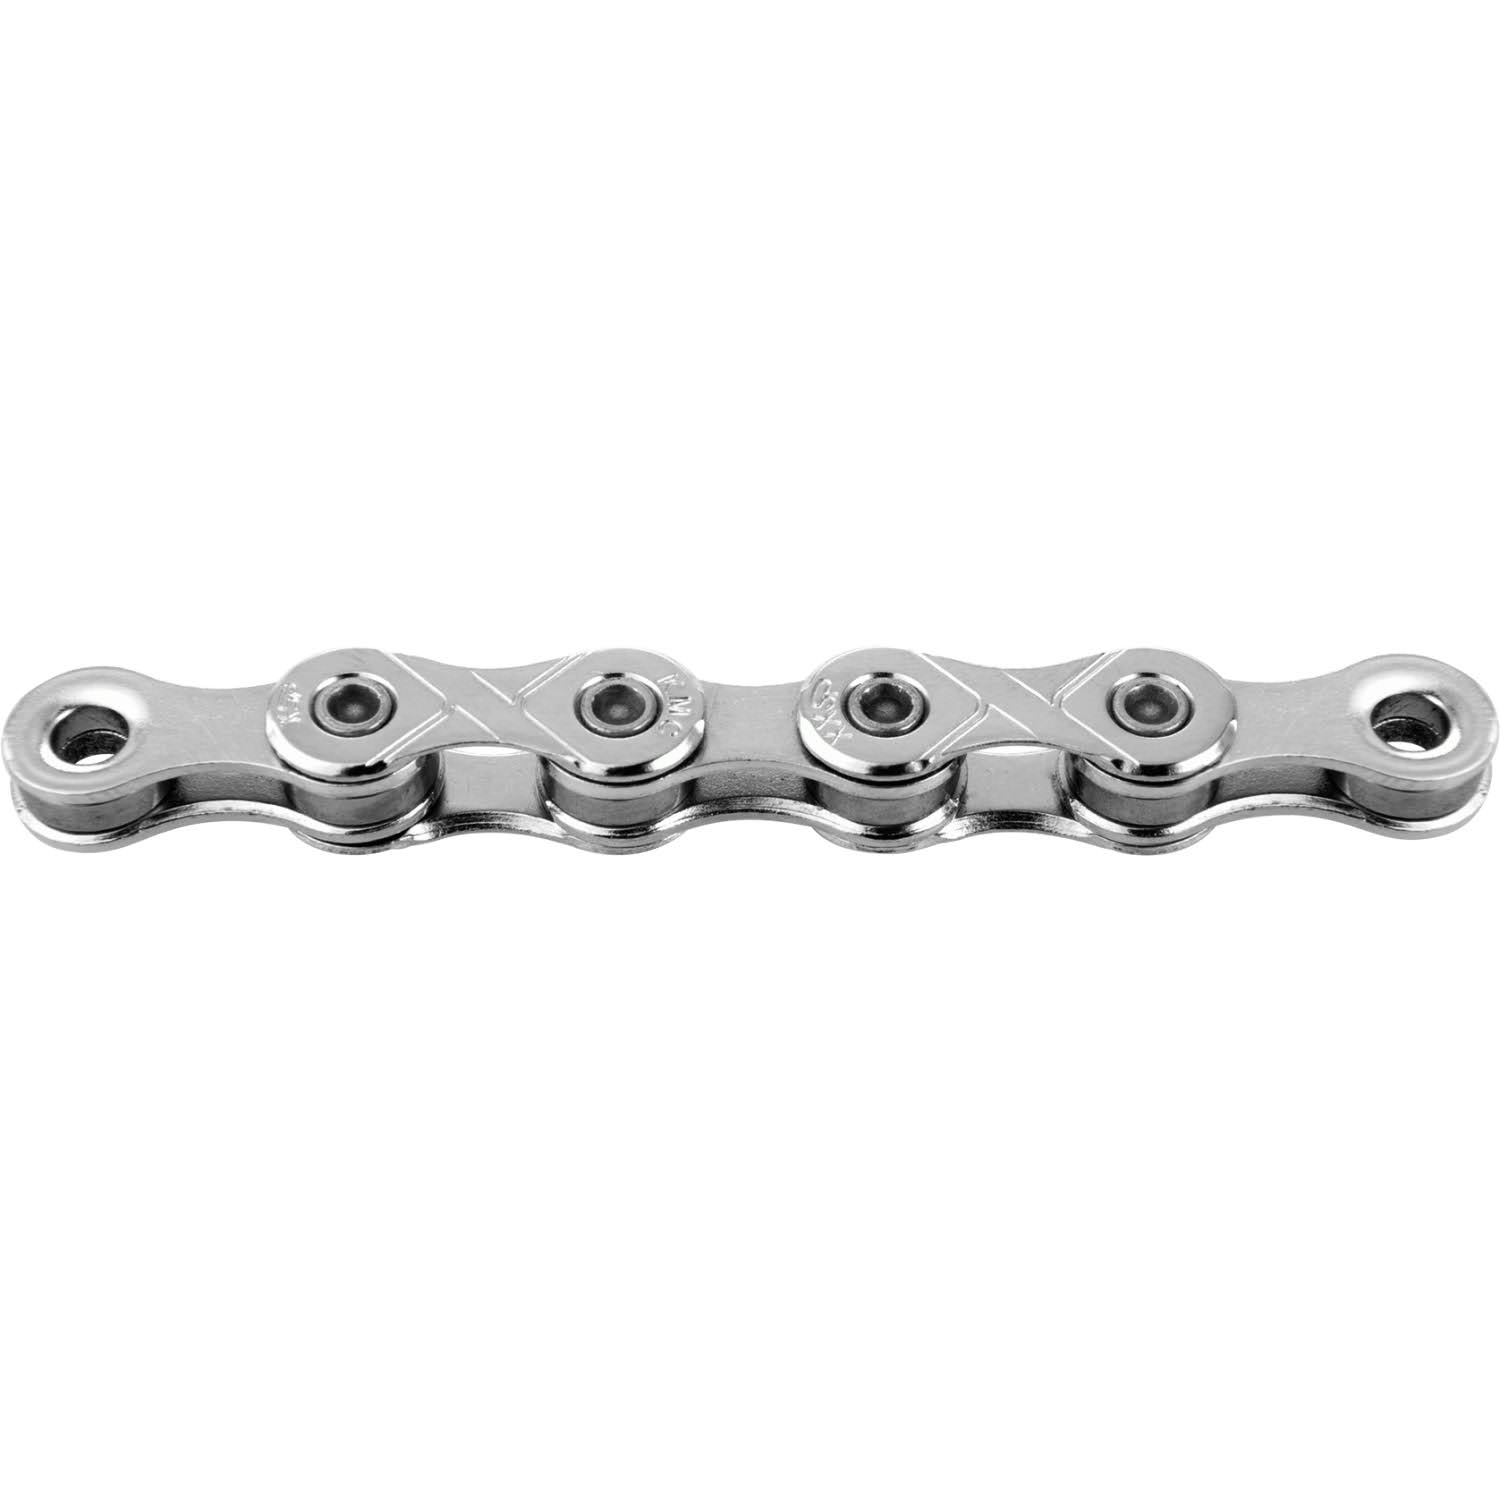 Kmc e1 Chain - Single Speed 3/32" 110 Links Silver